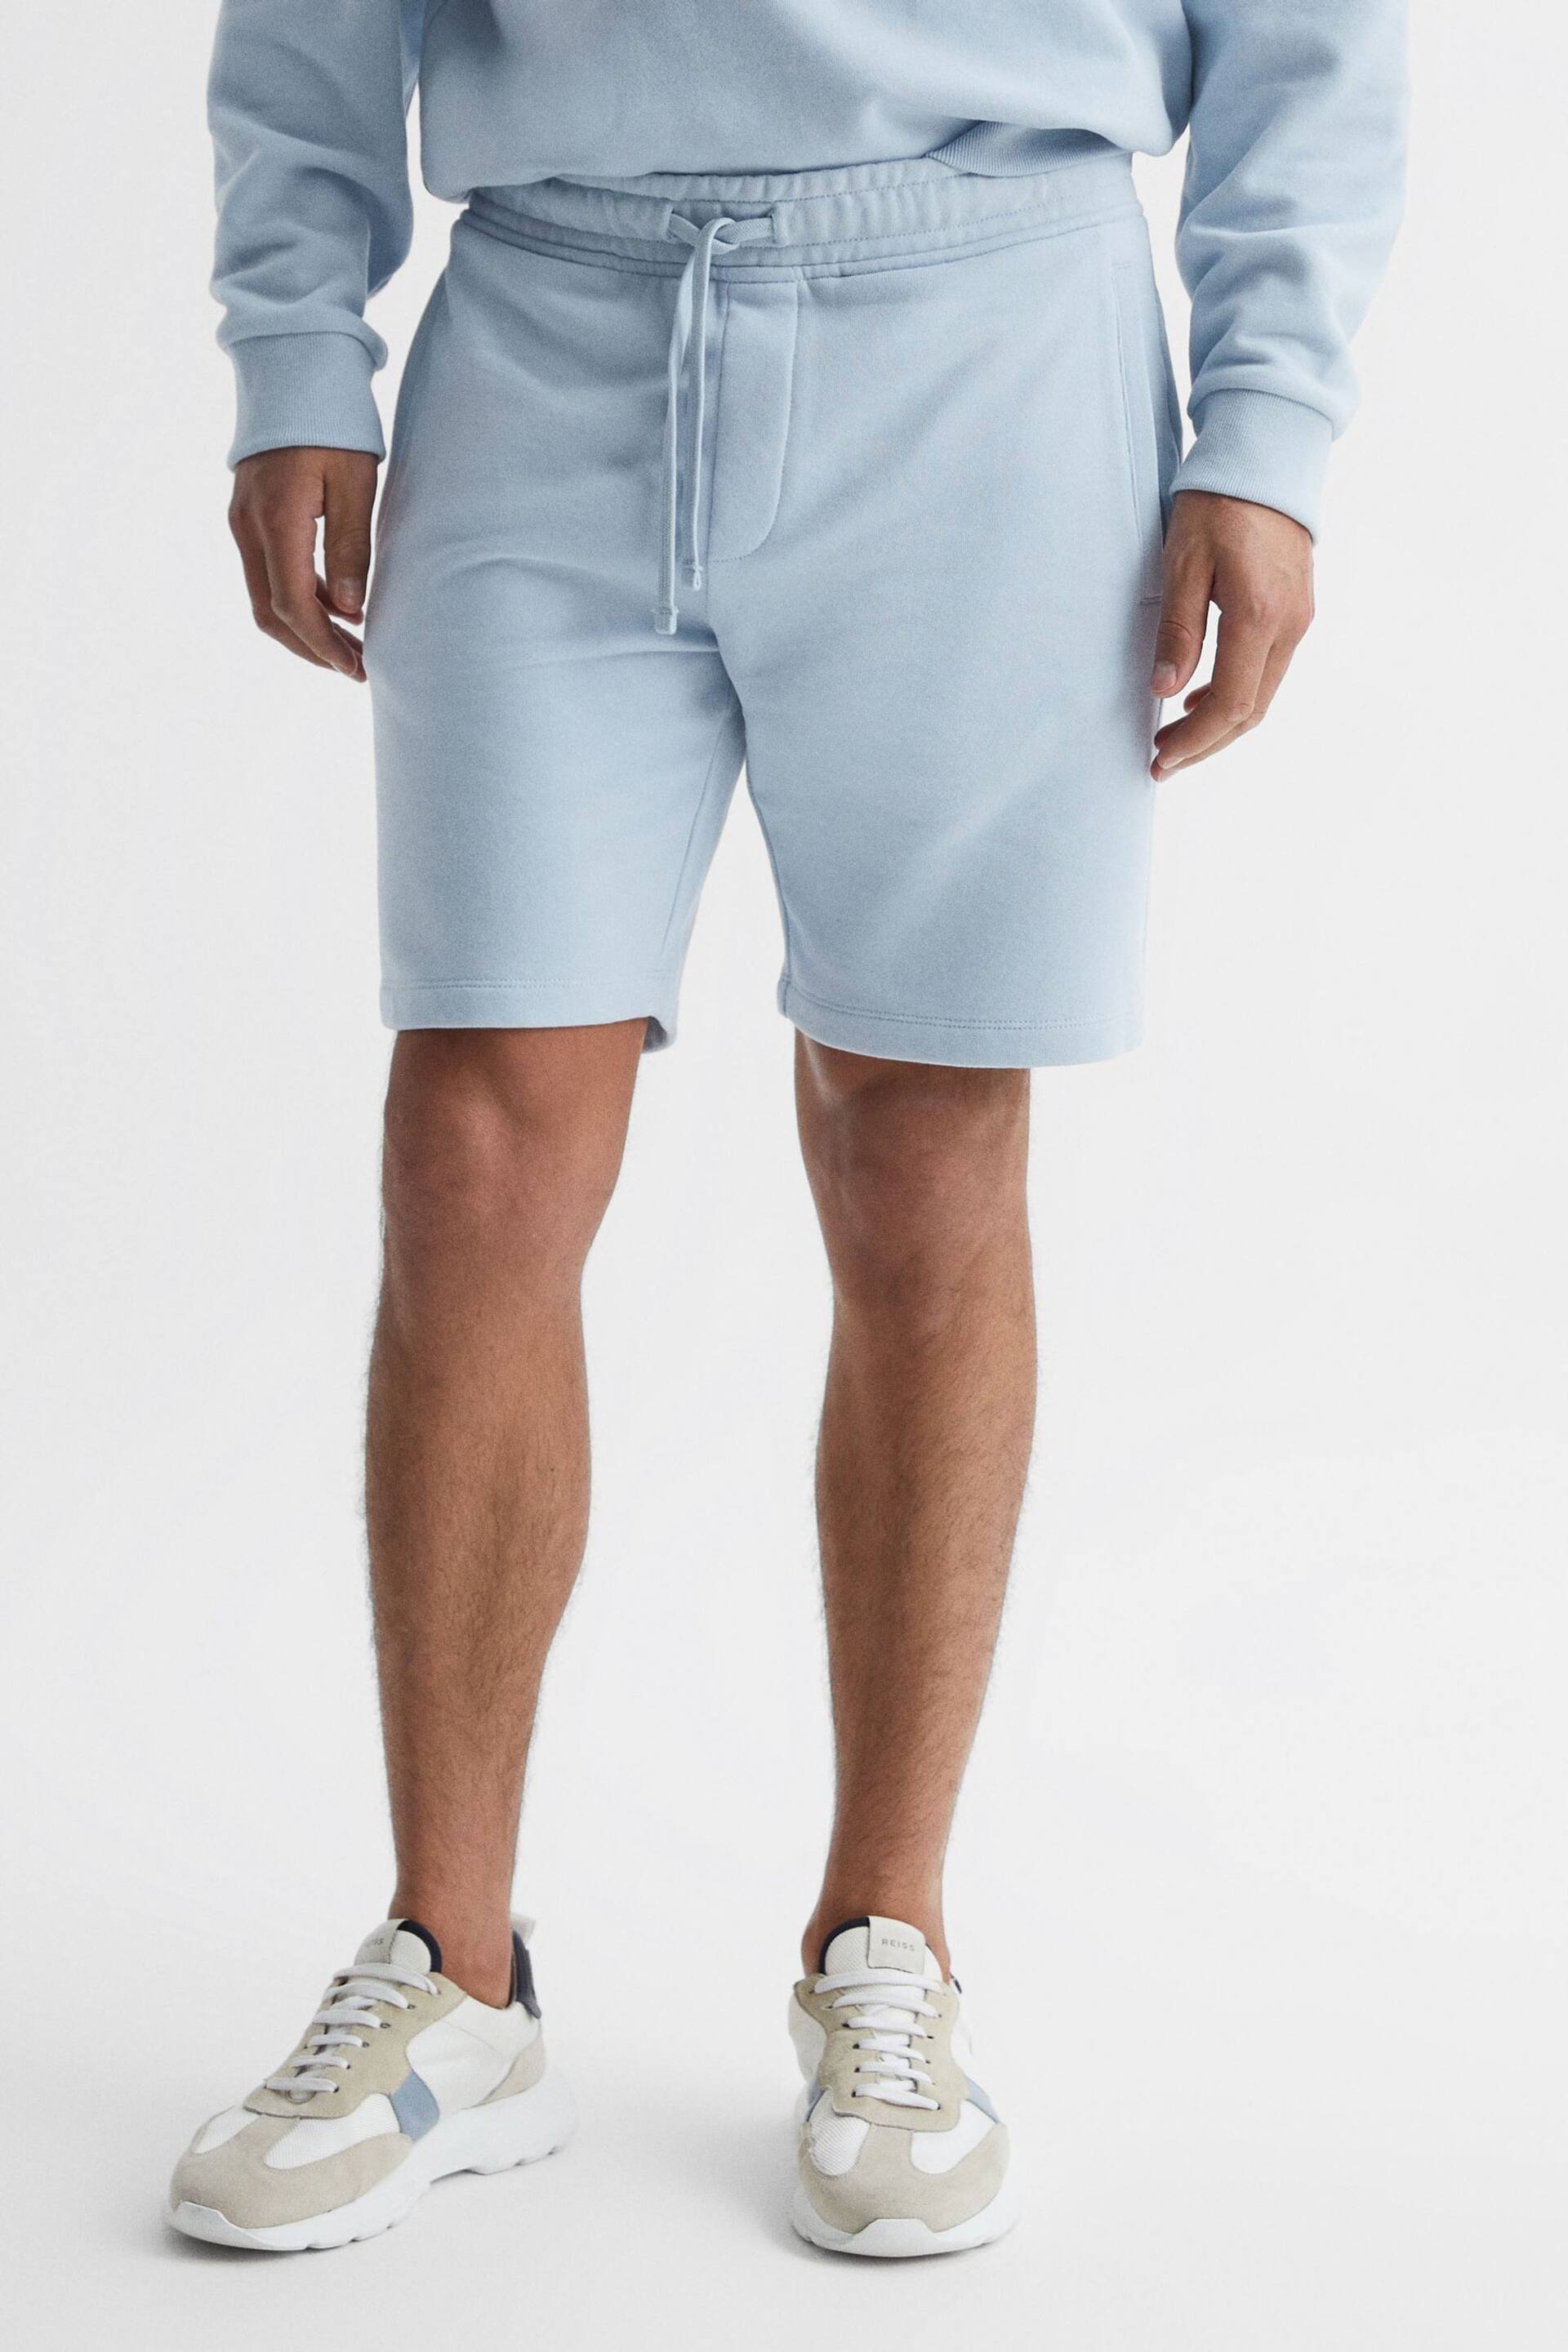 Reiss Ice Blue Henry Garment Dye Jersey Shorts - Image 1 of 5